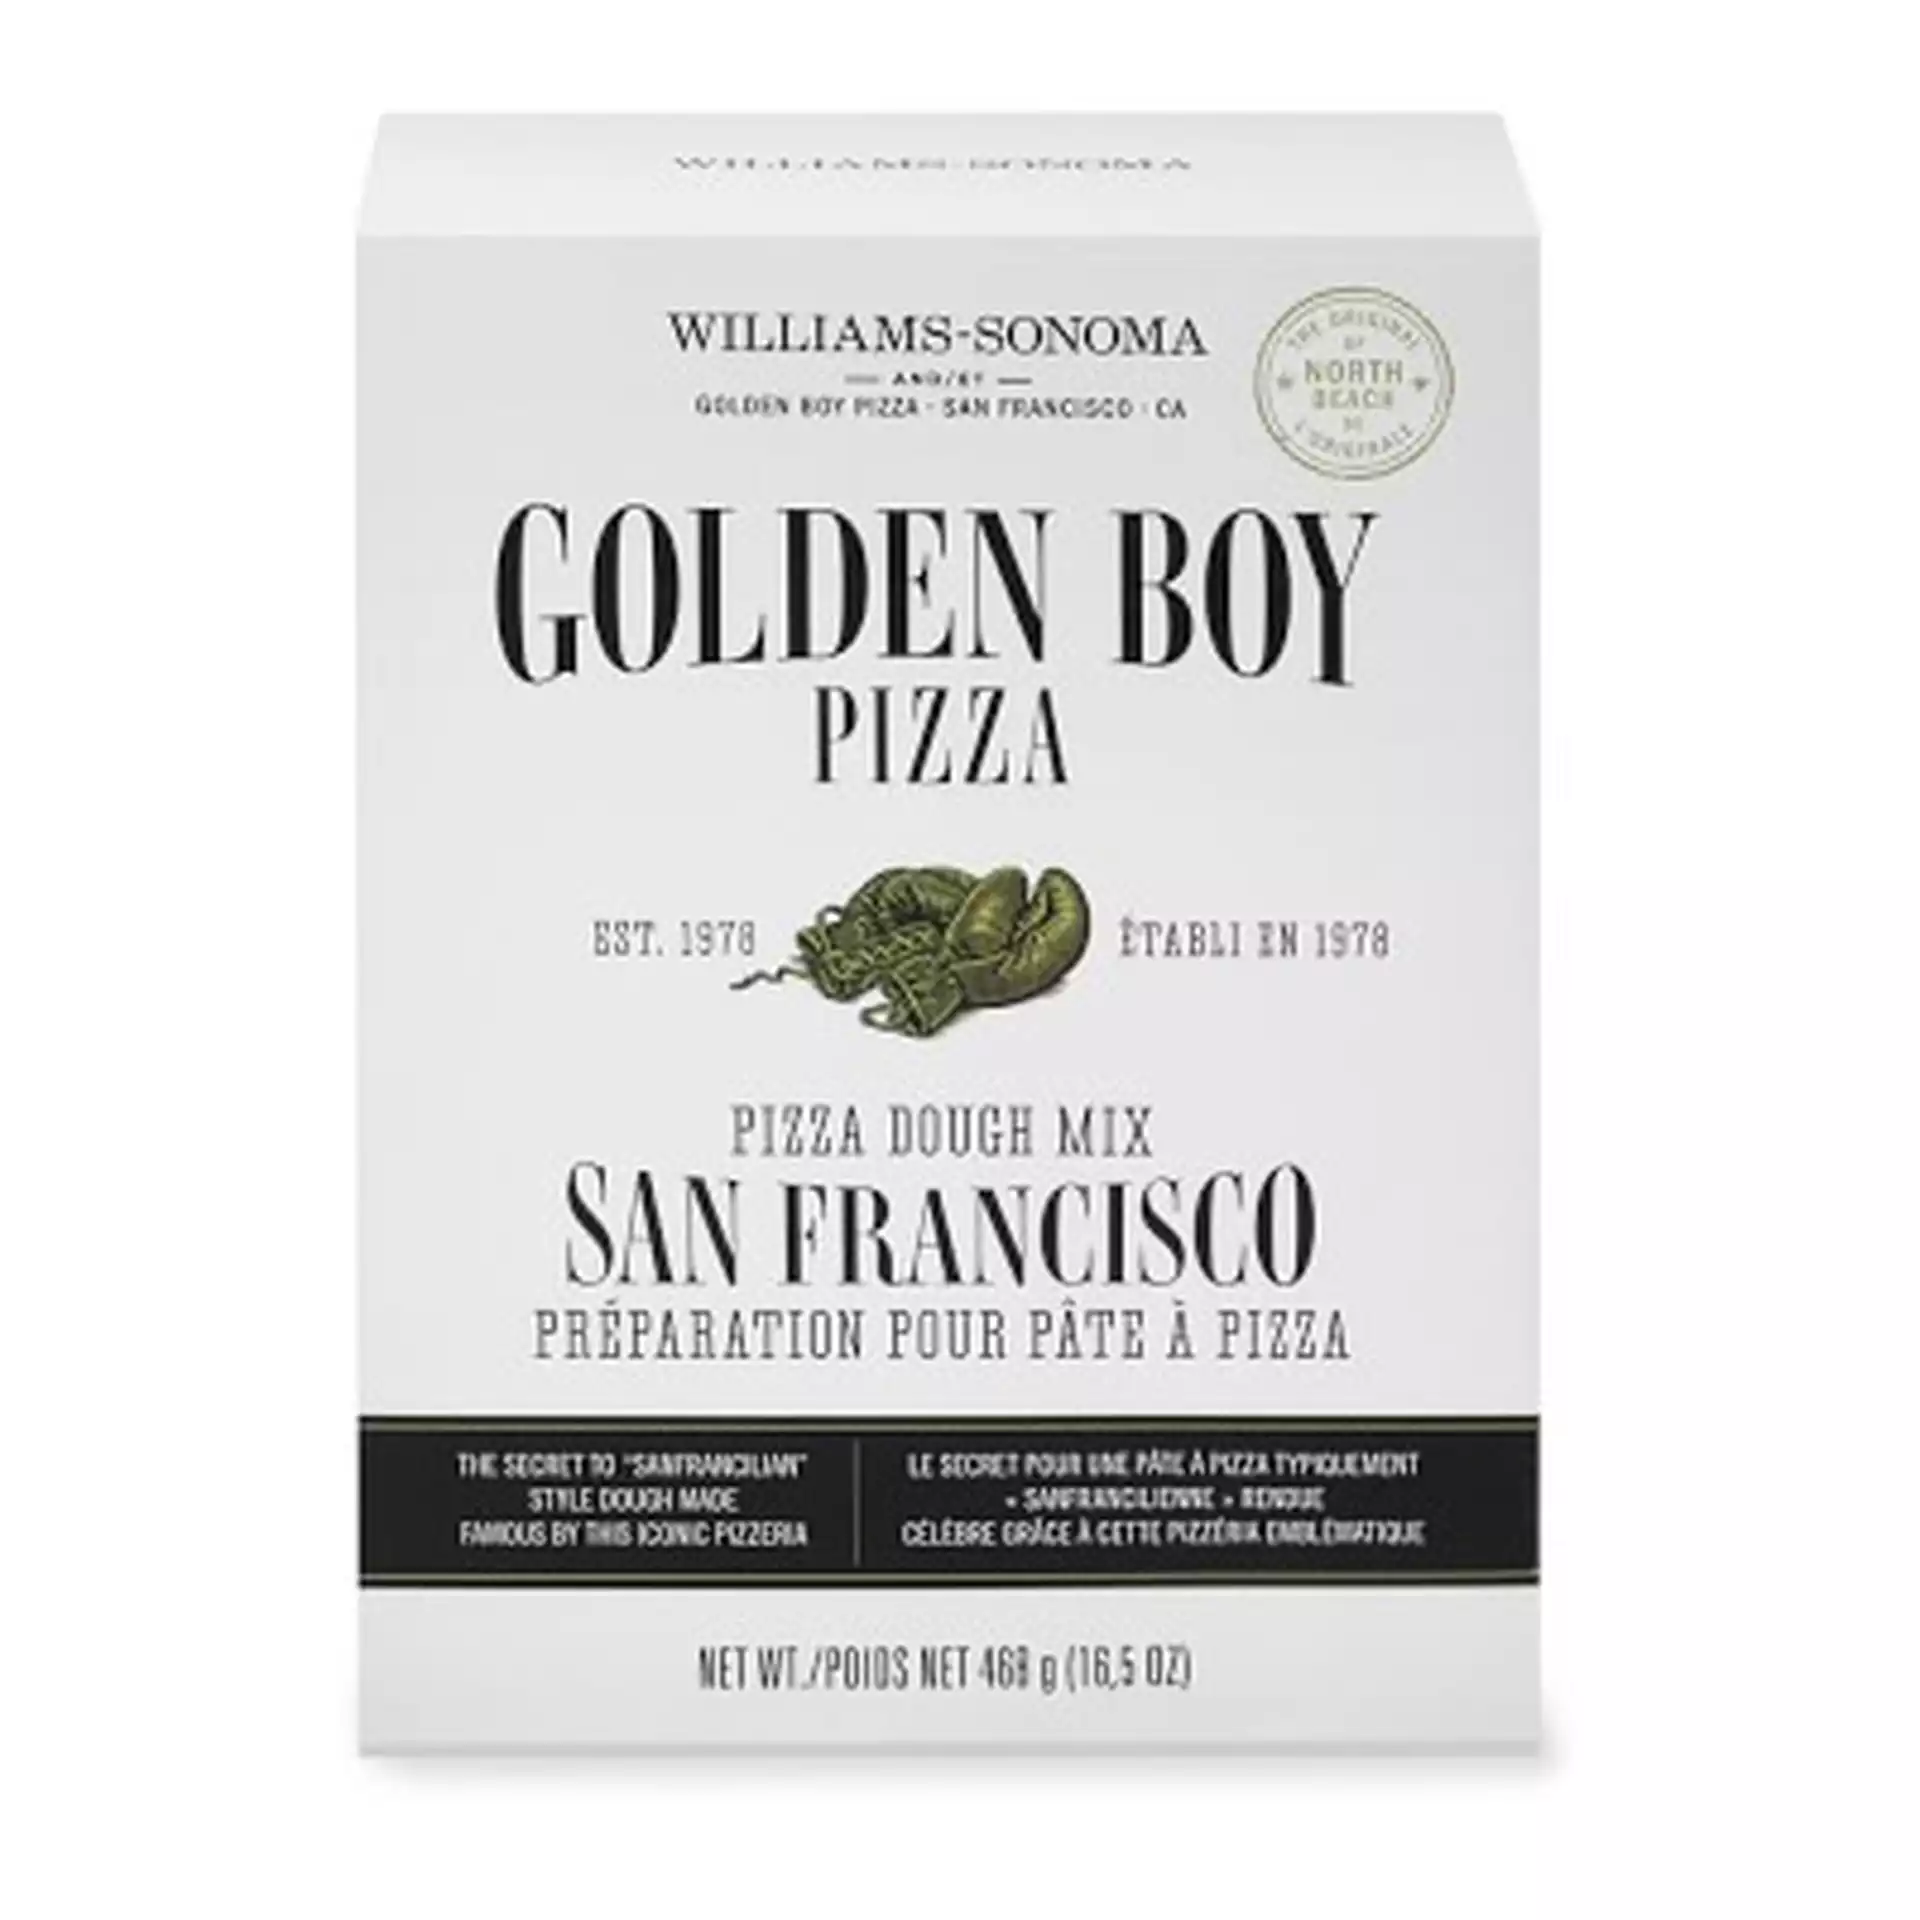 Golden Boy Pizza Crust Mix, Set of 2